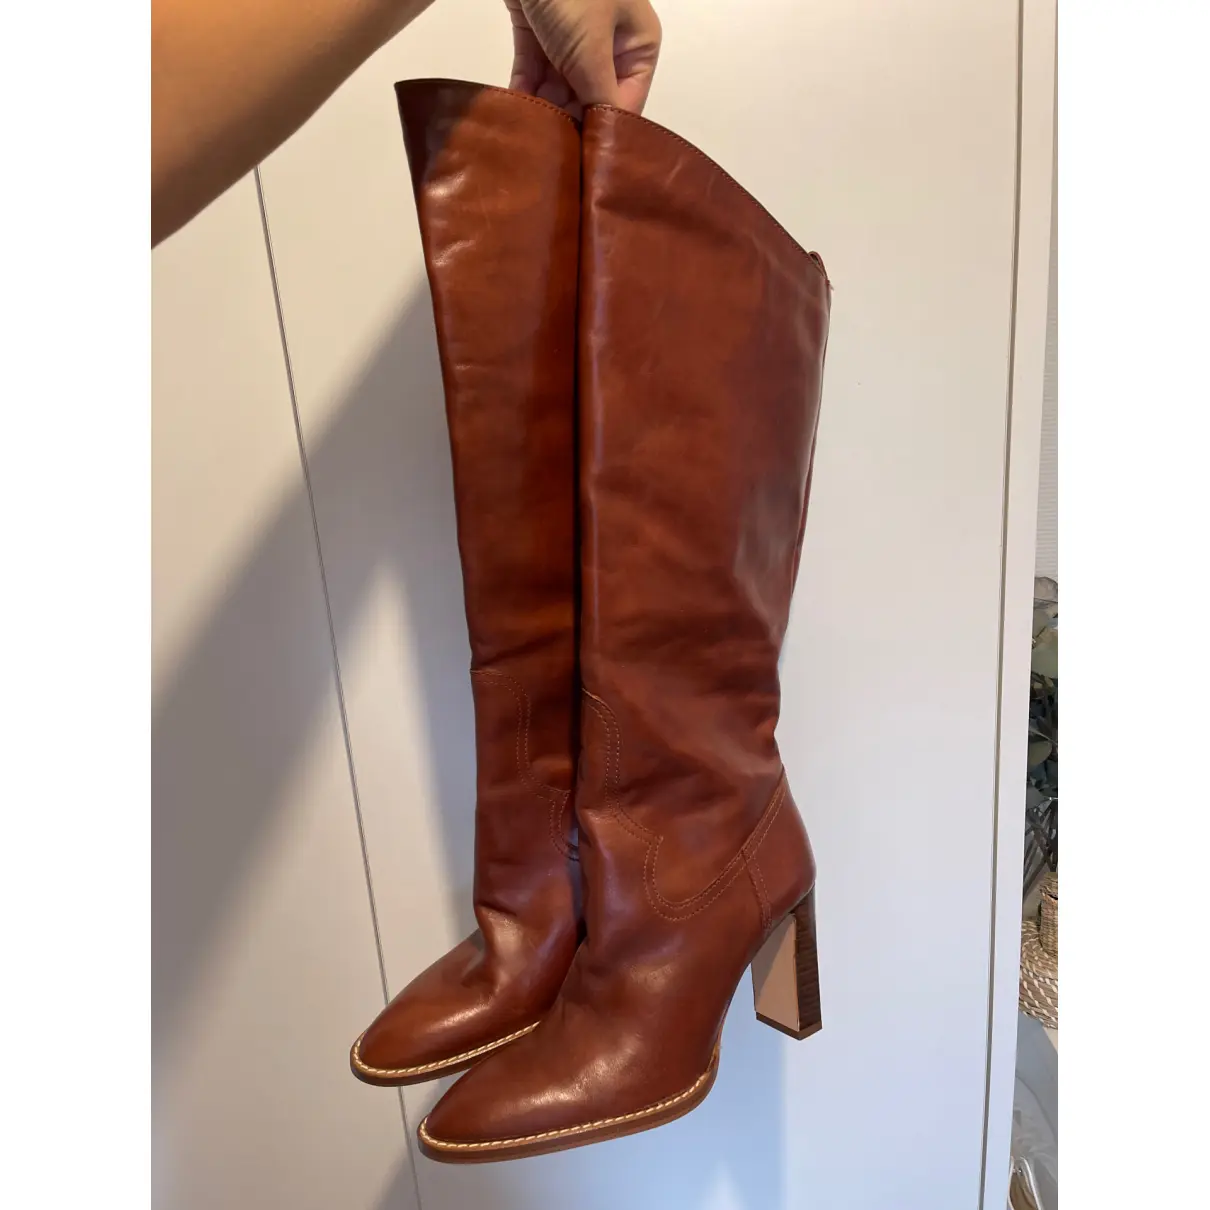 Buy Zara Leather cowboy boots online